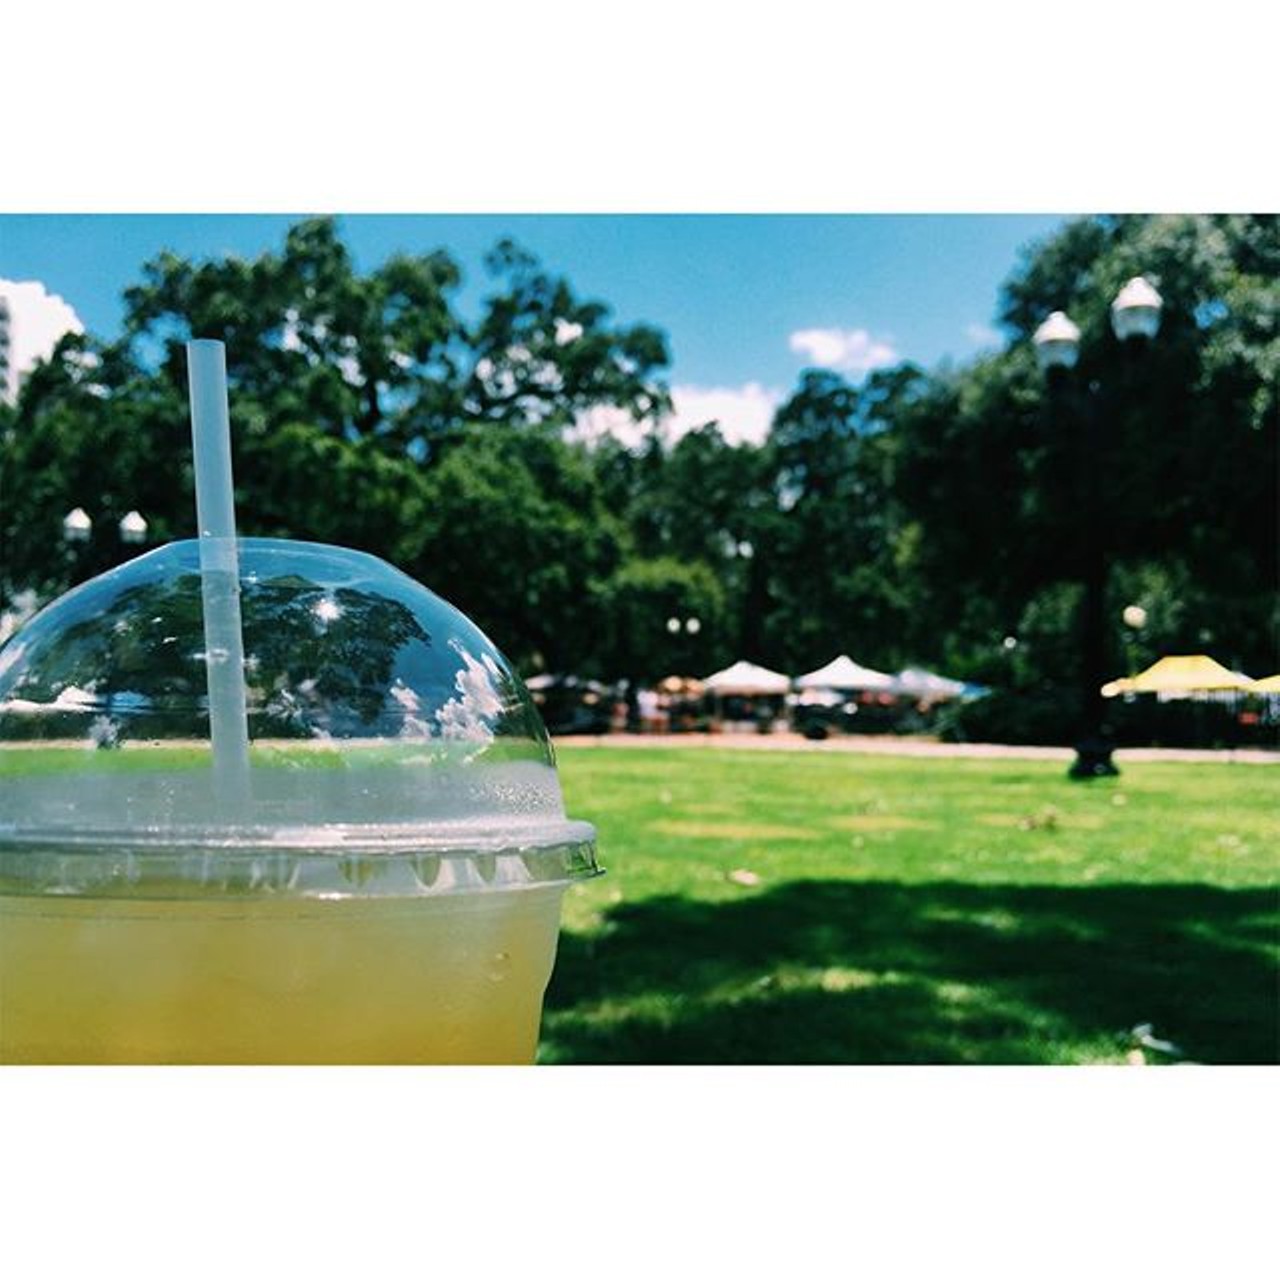 Instagram user pimminie enjoyed some sugar cane juice at Sunday's farmers market.